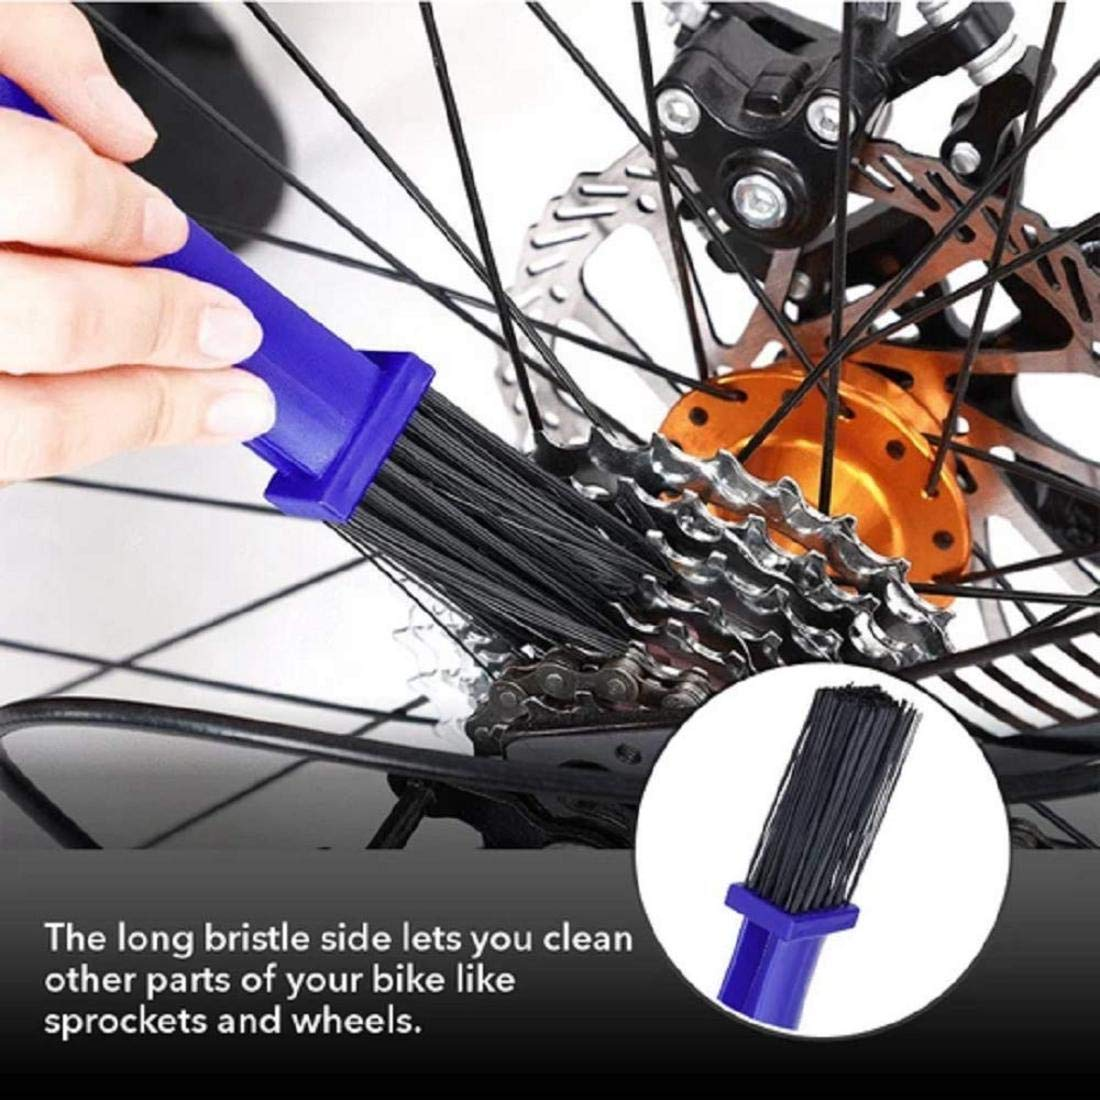 Cepillo limpiador de cadenas para moto o bicicleta